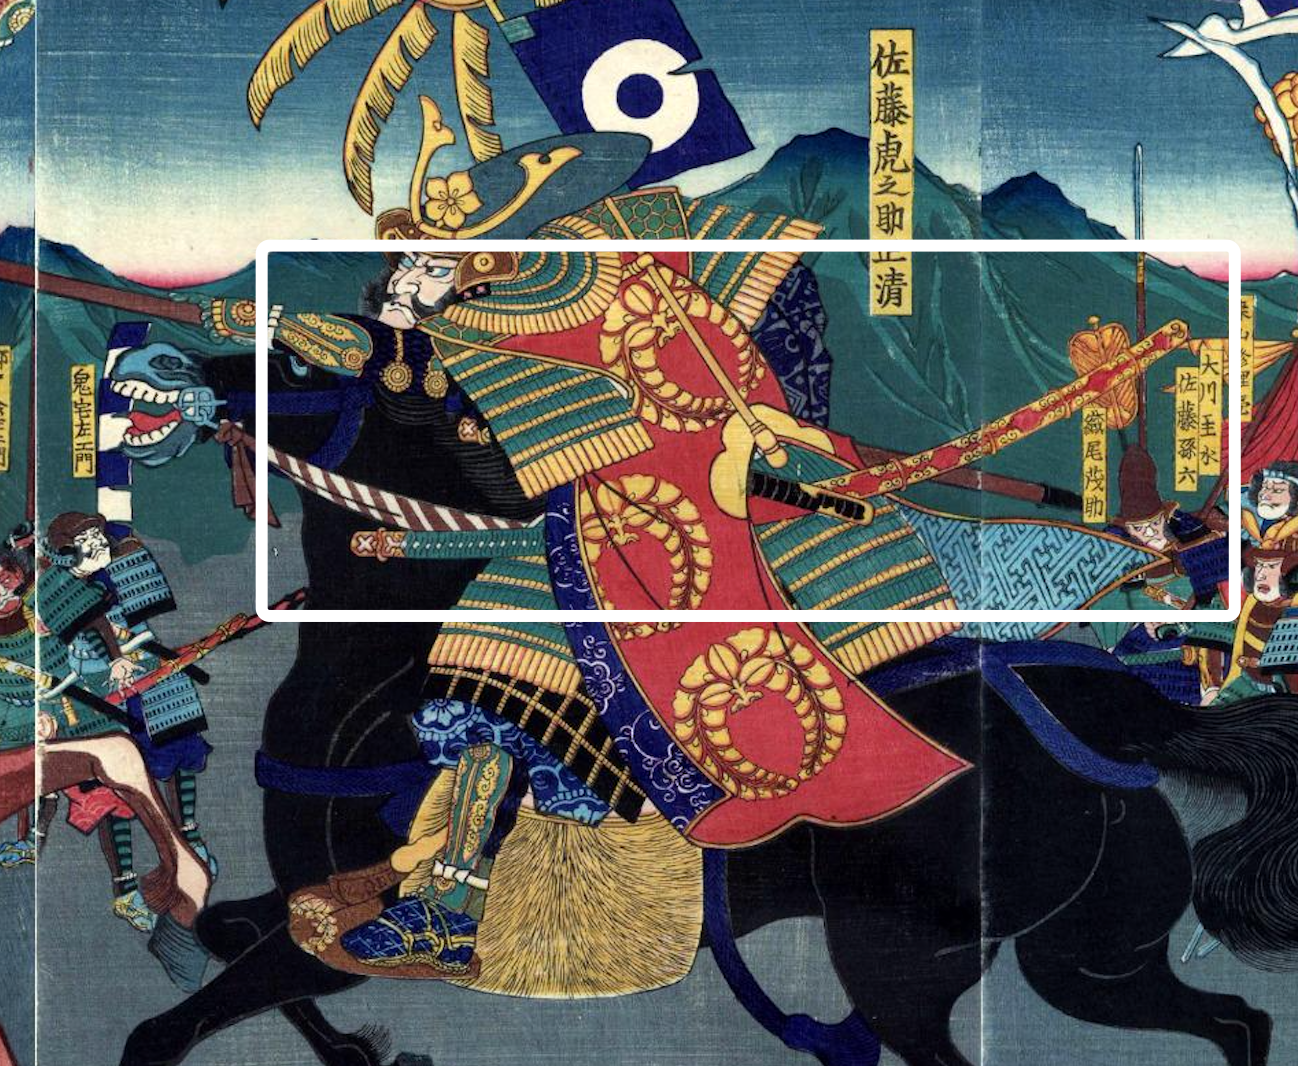 A mounted Samurai Wearing Tachi sword with edge downward